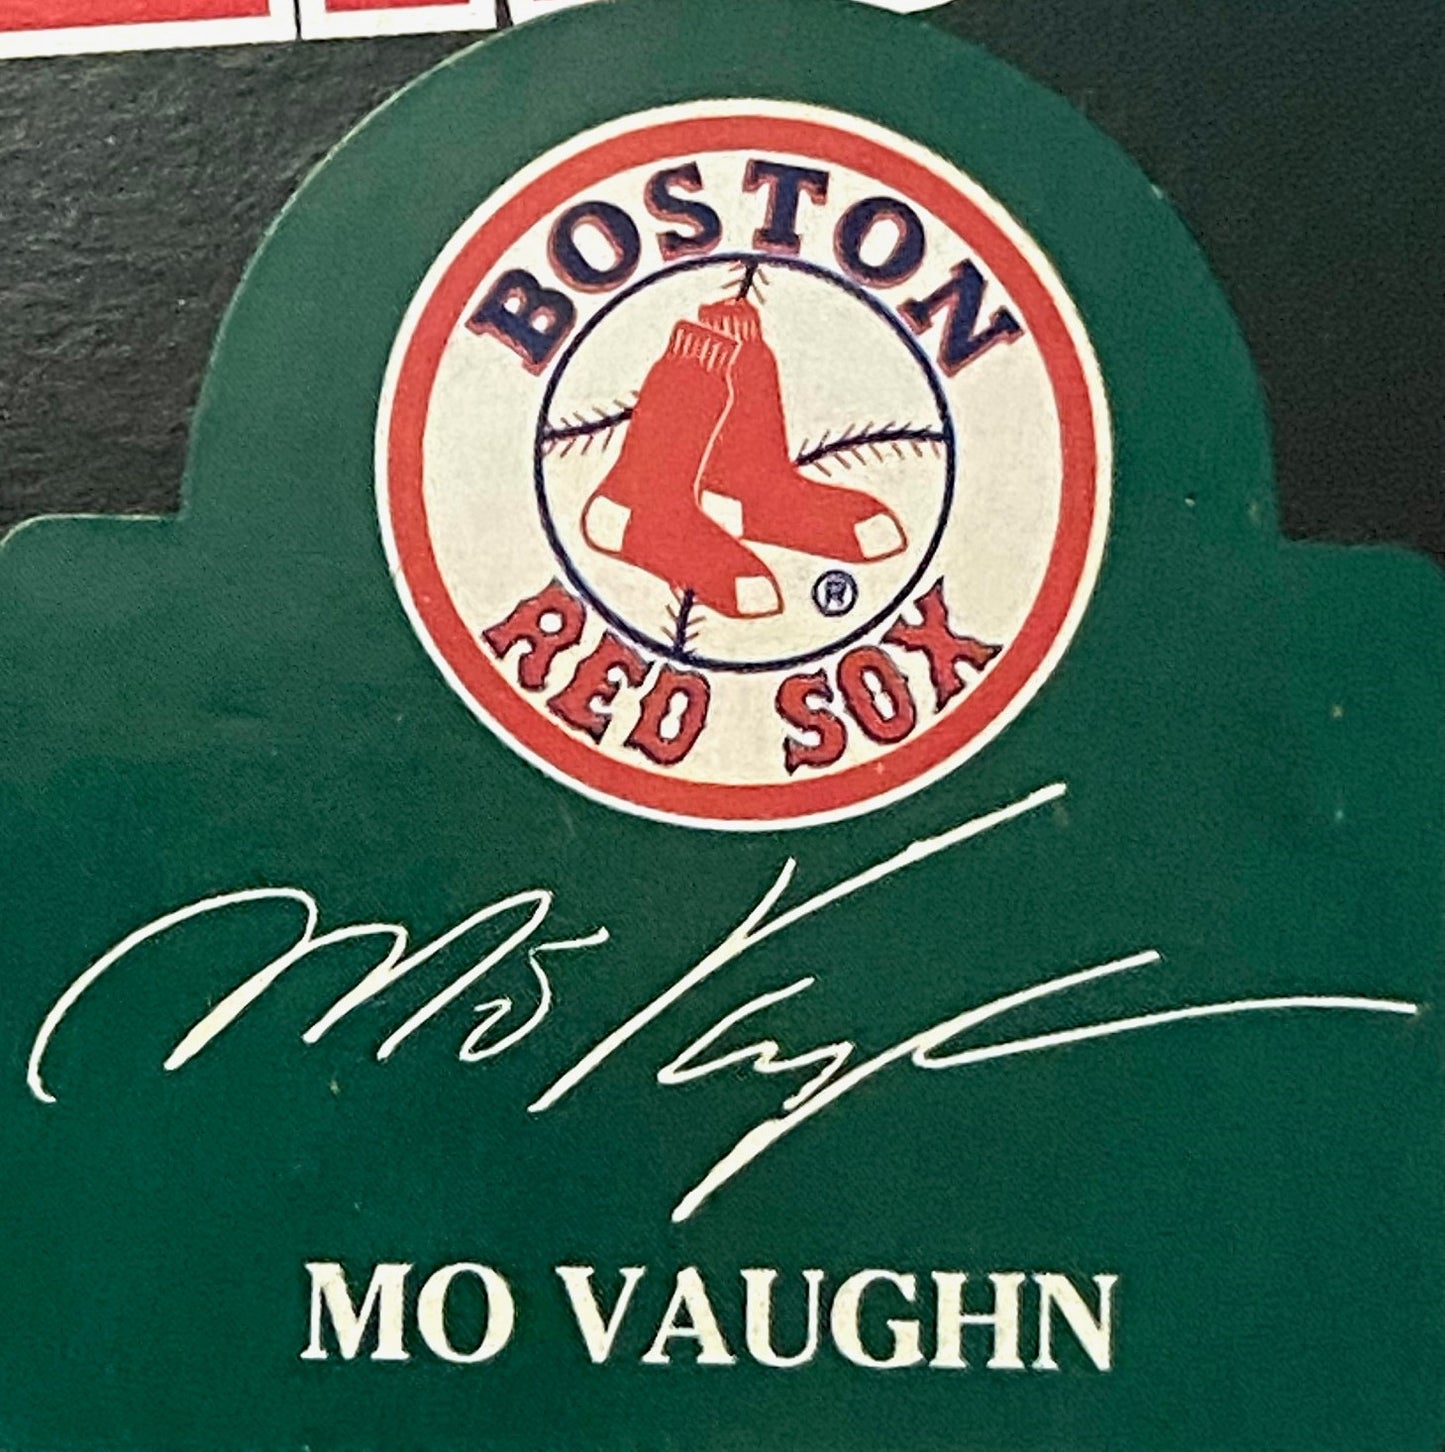 Mo Vaughn 1996 Boston Red Sox MLB Headliner Figurine by Corinthian